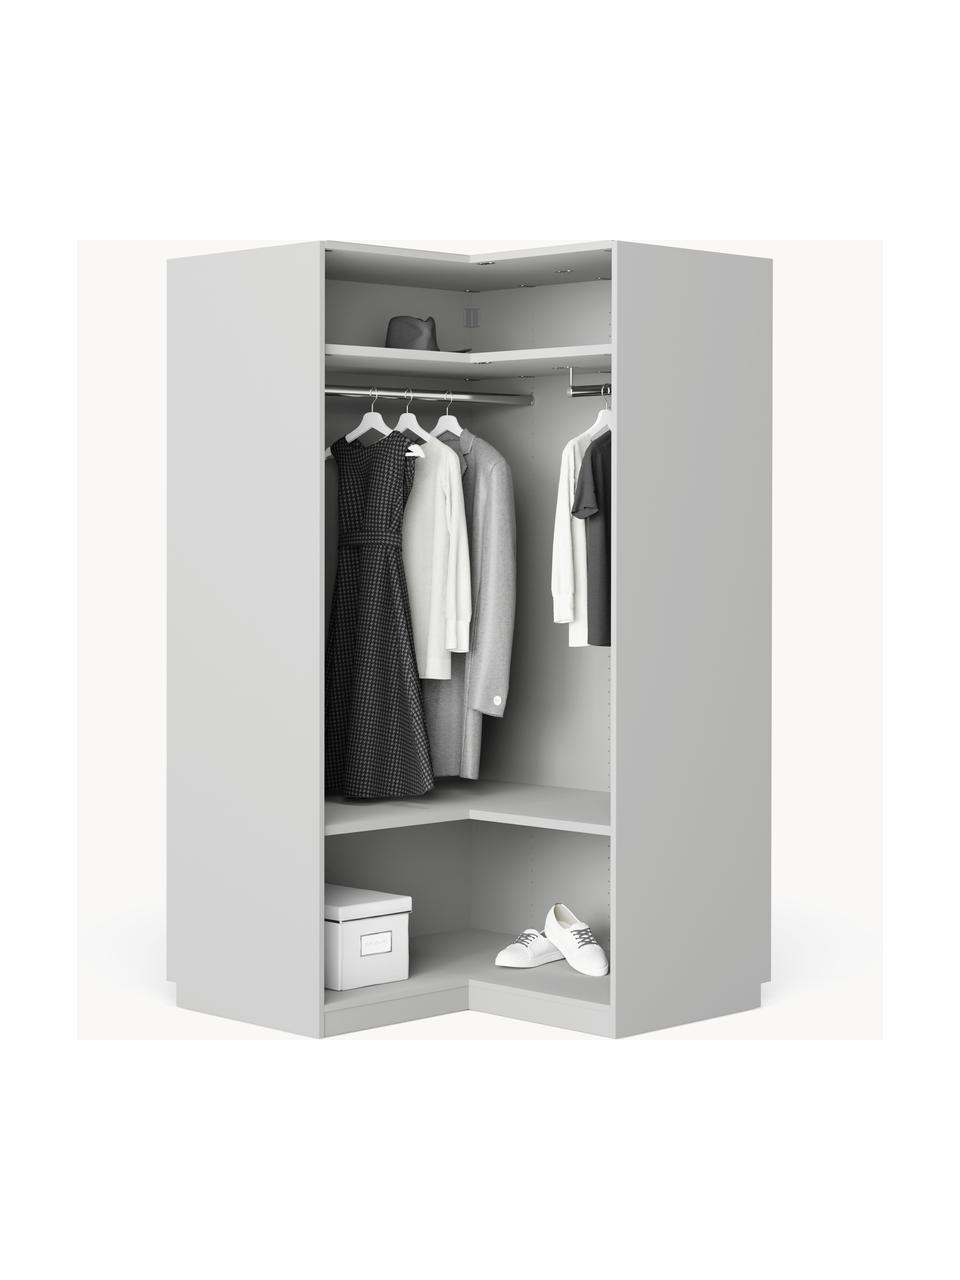 Modulární rohová šatní skříň Simone, šířka 115 cm, Dřevo, šedá, Rohový modul, Š 115 cm x V 200 cm